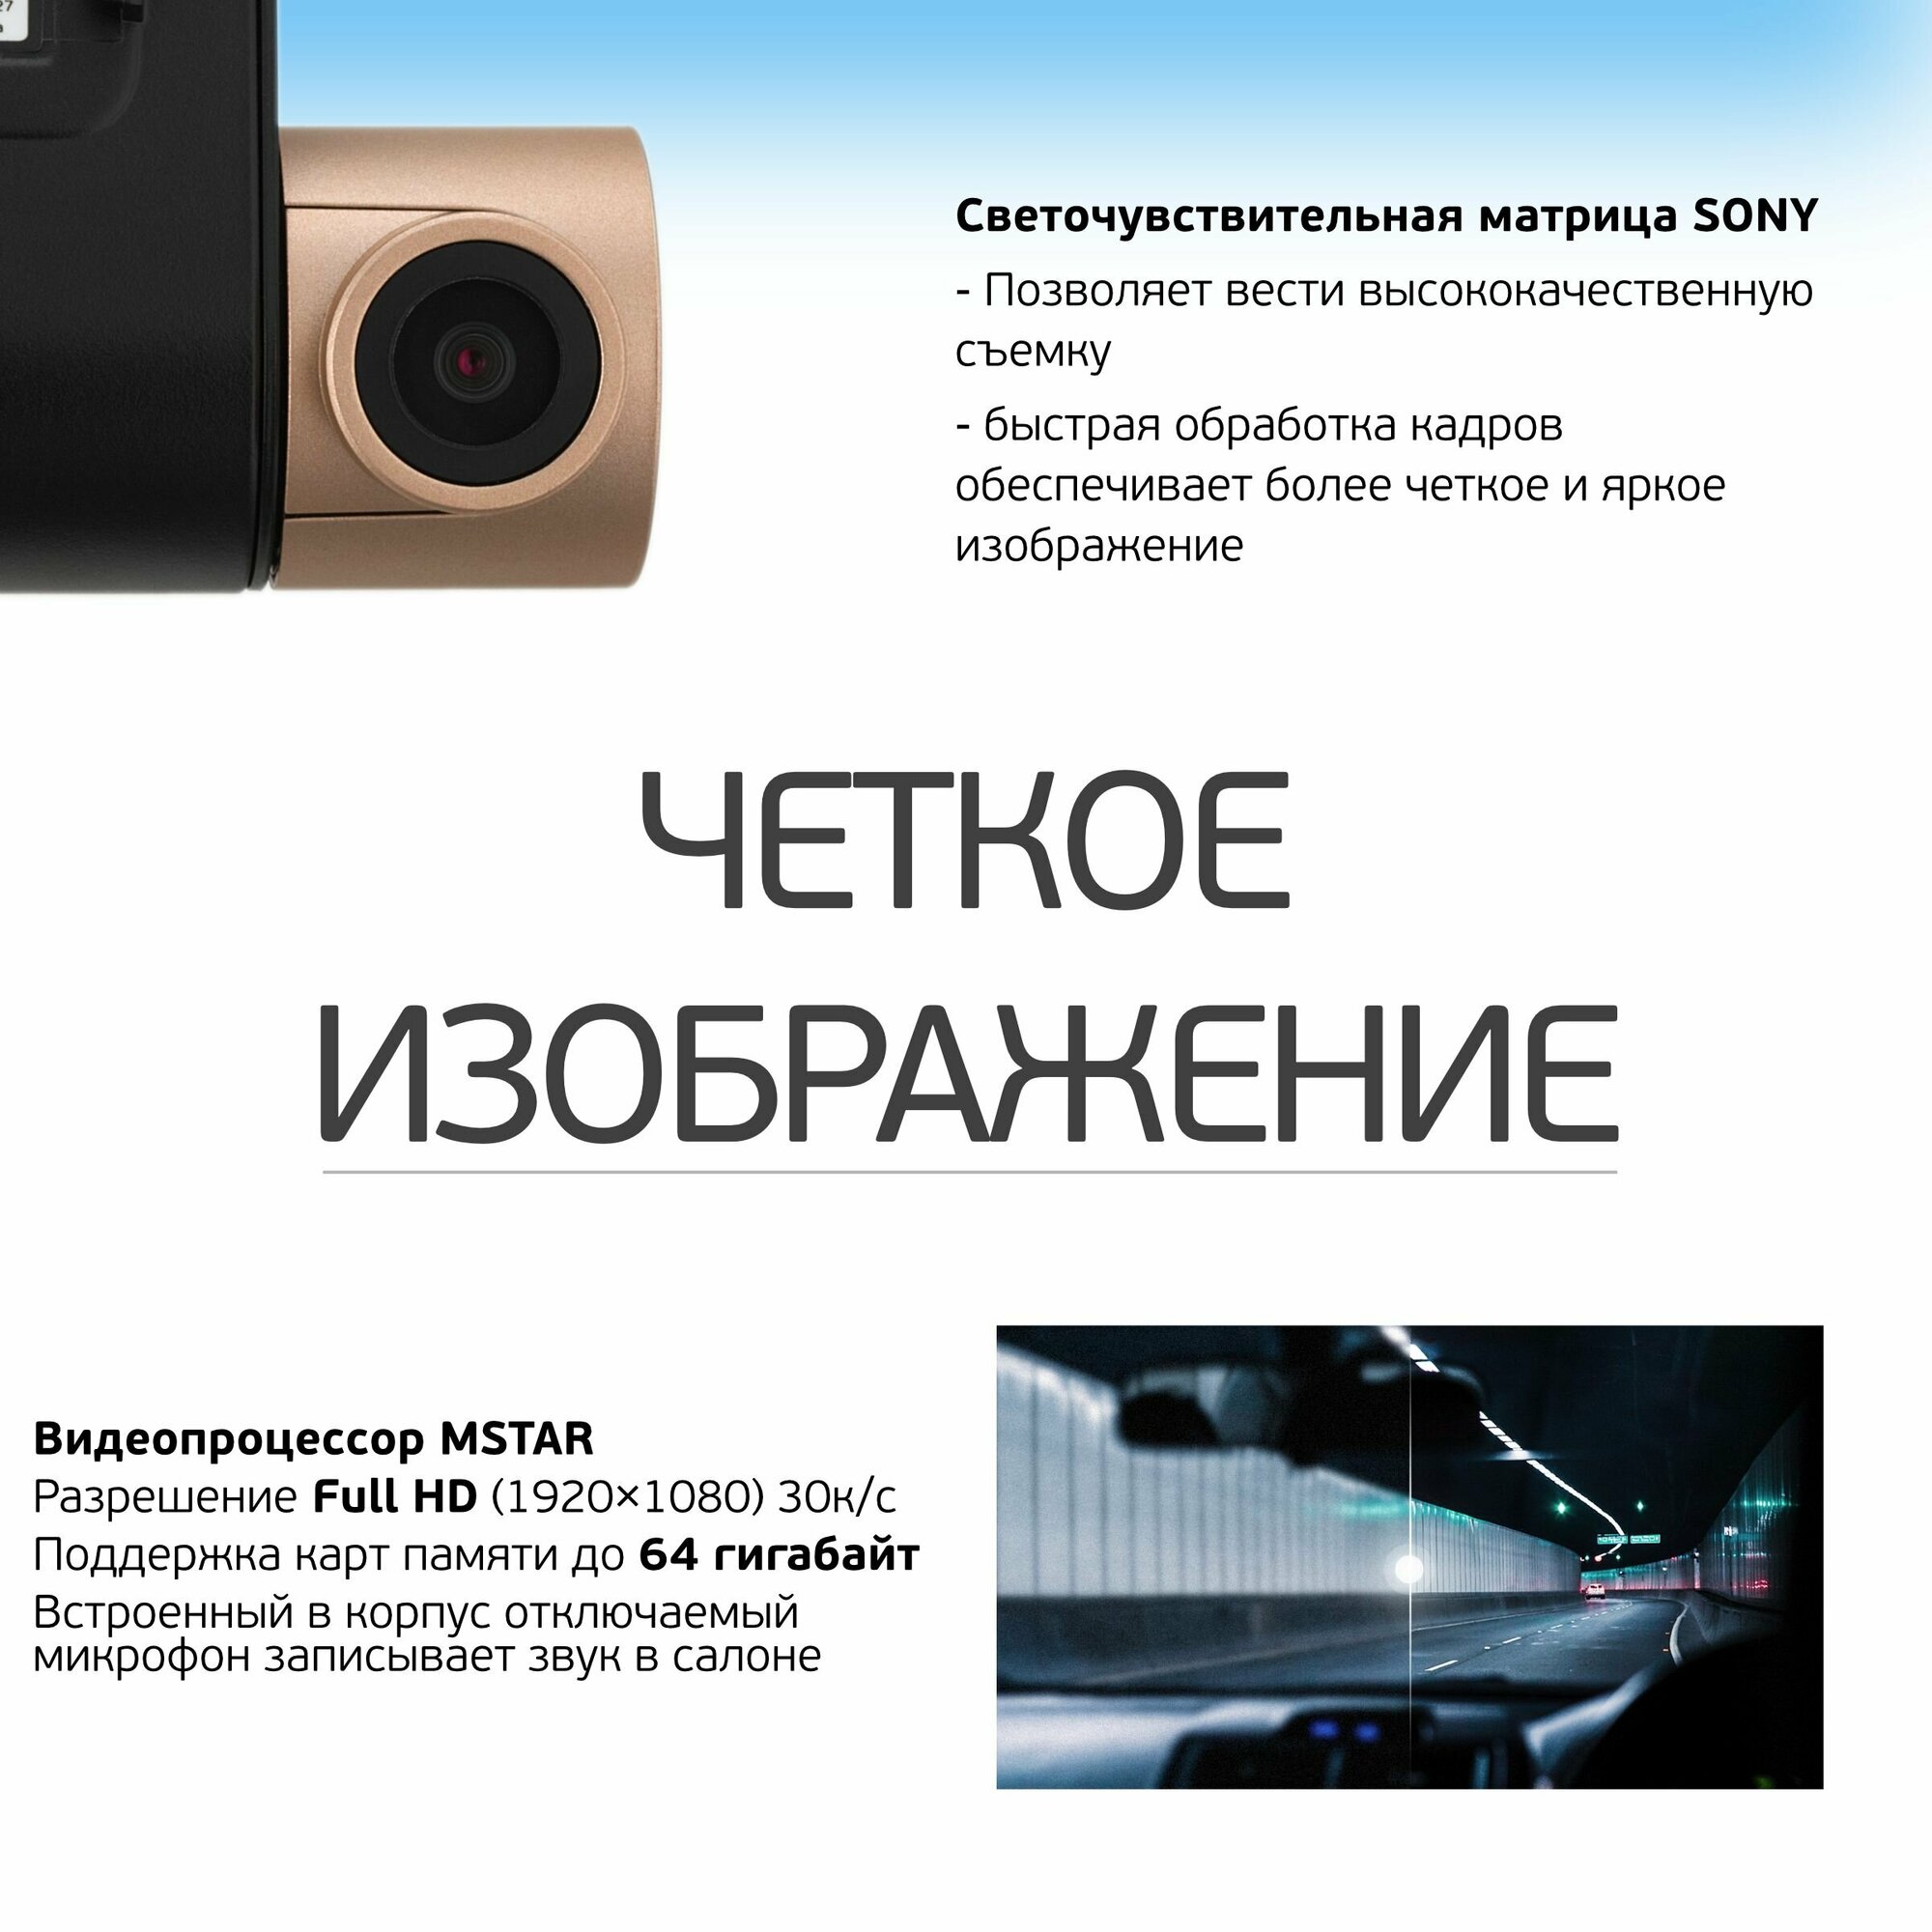 Видеорегистратор 70mai Dash Cam Pro Lite Midrive D08